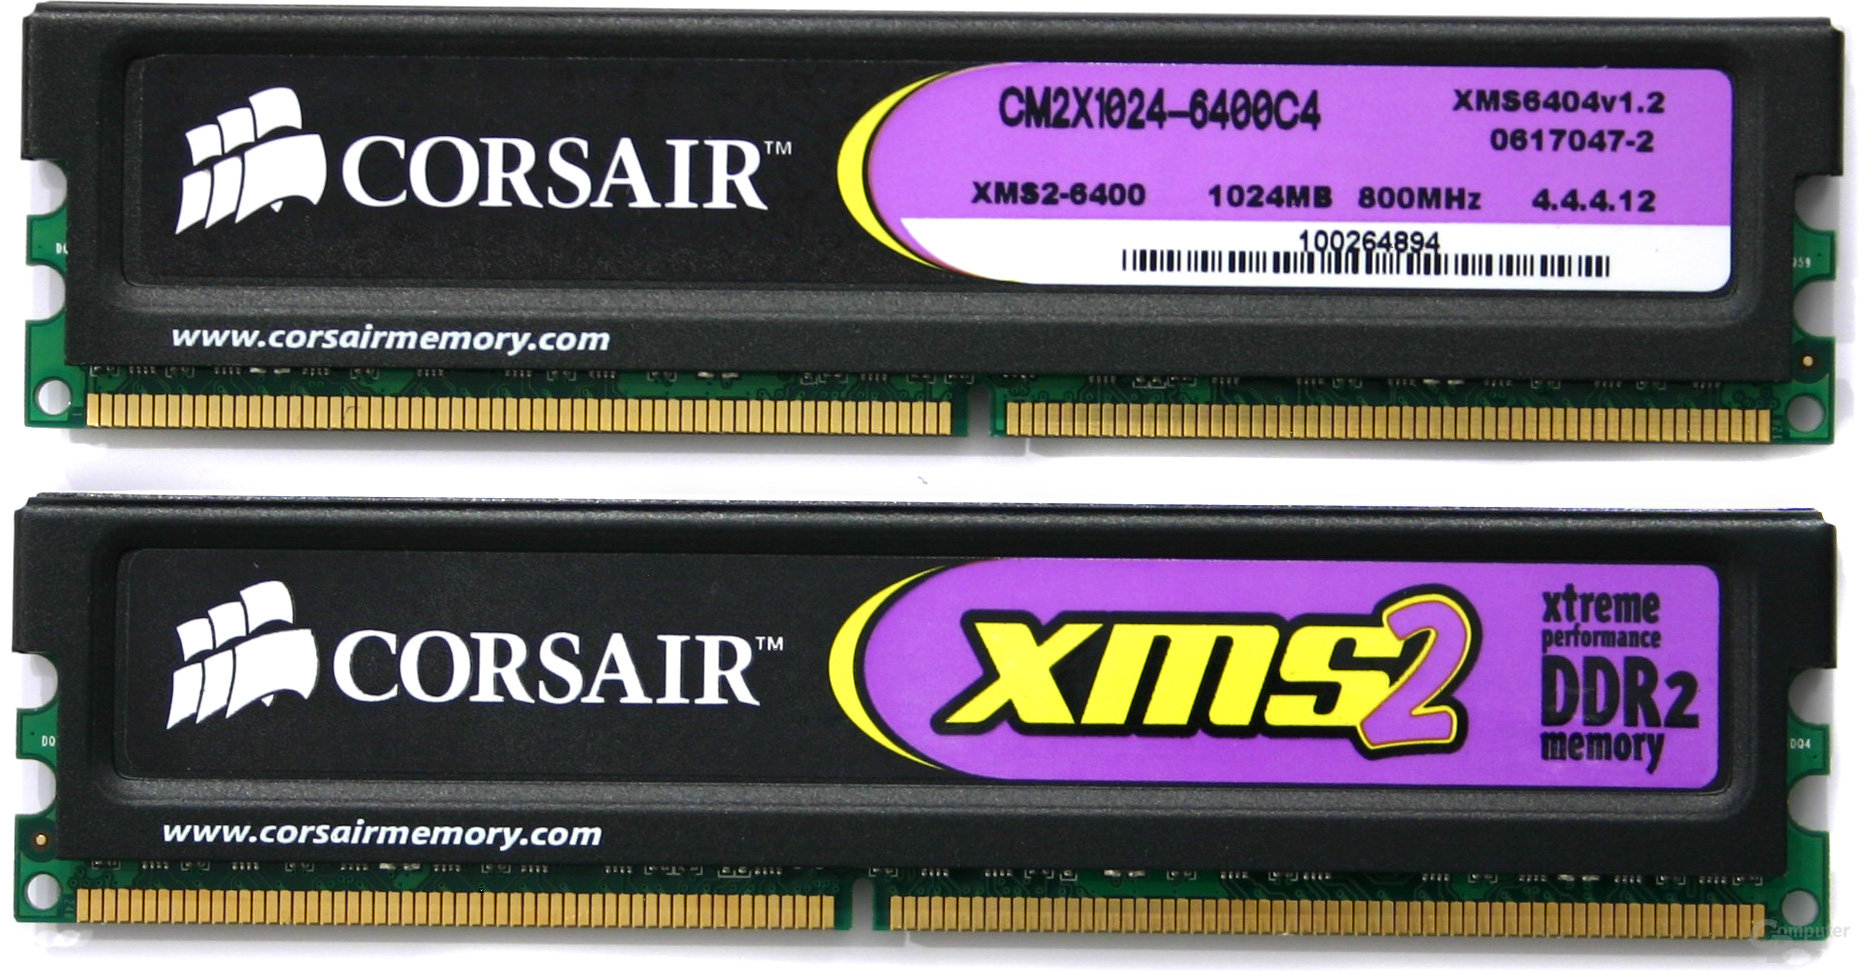 Corsair CM2X1024-6400C4: SLI-Ready-Memory